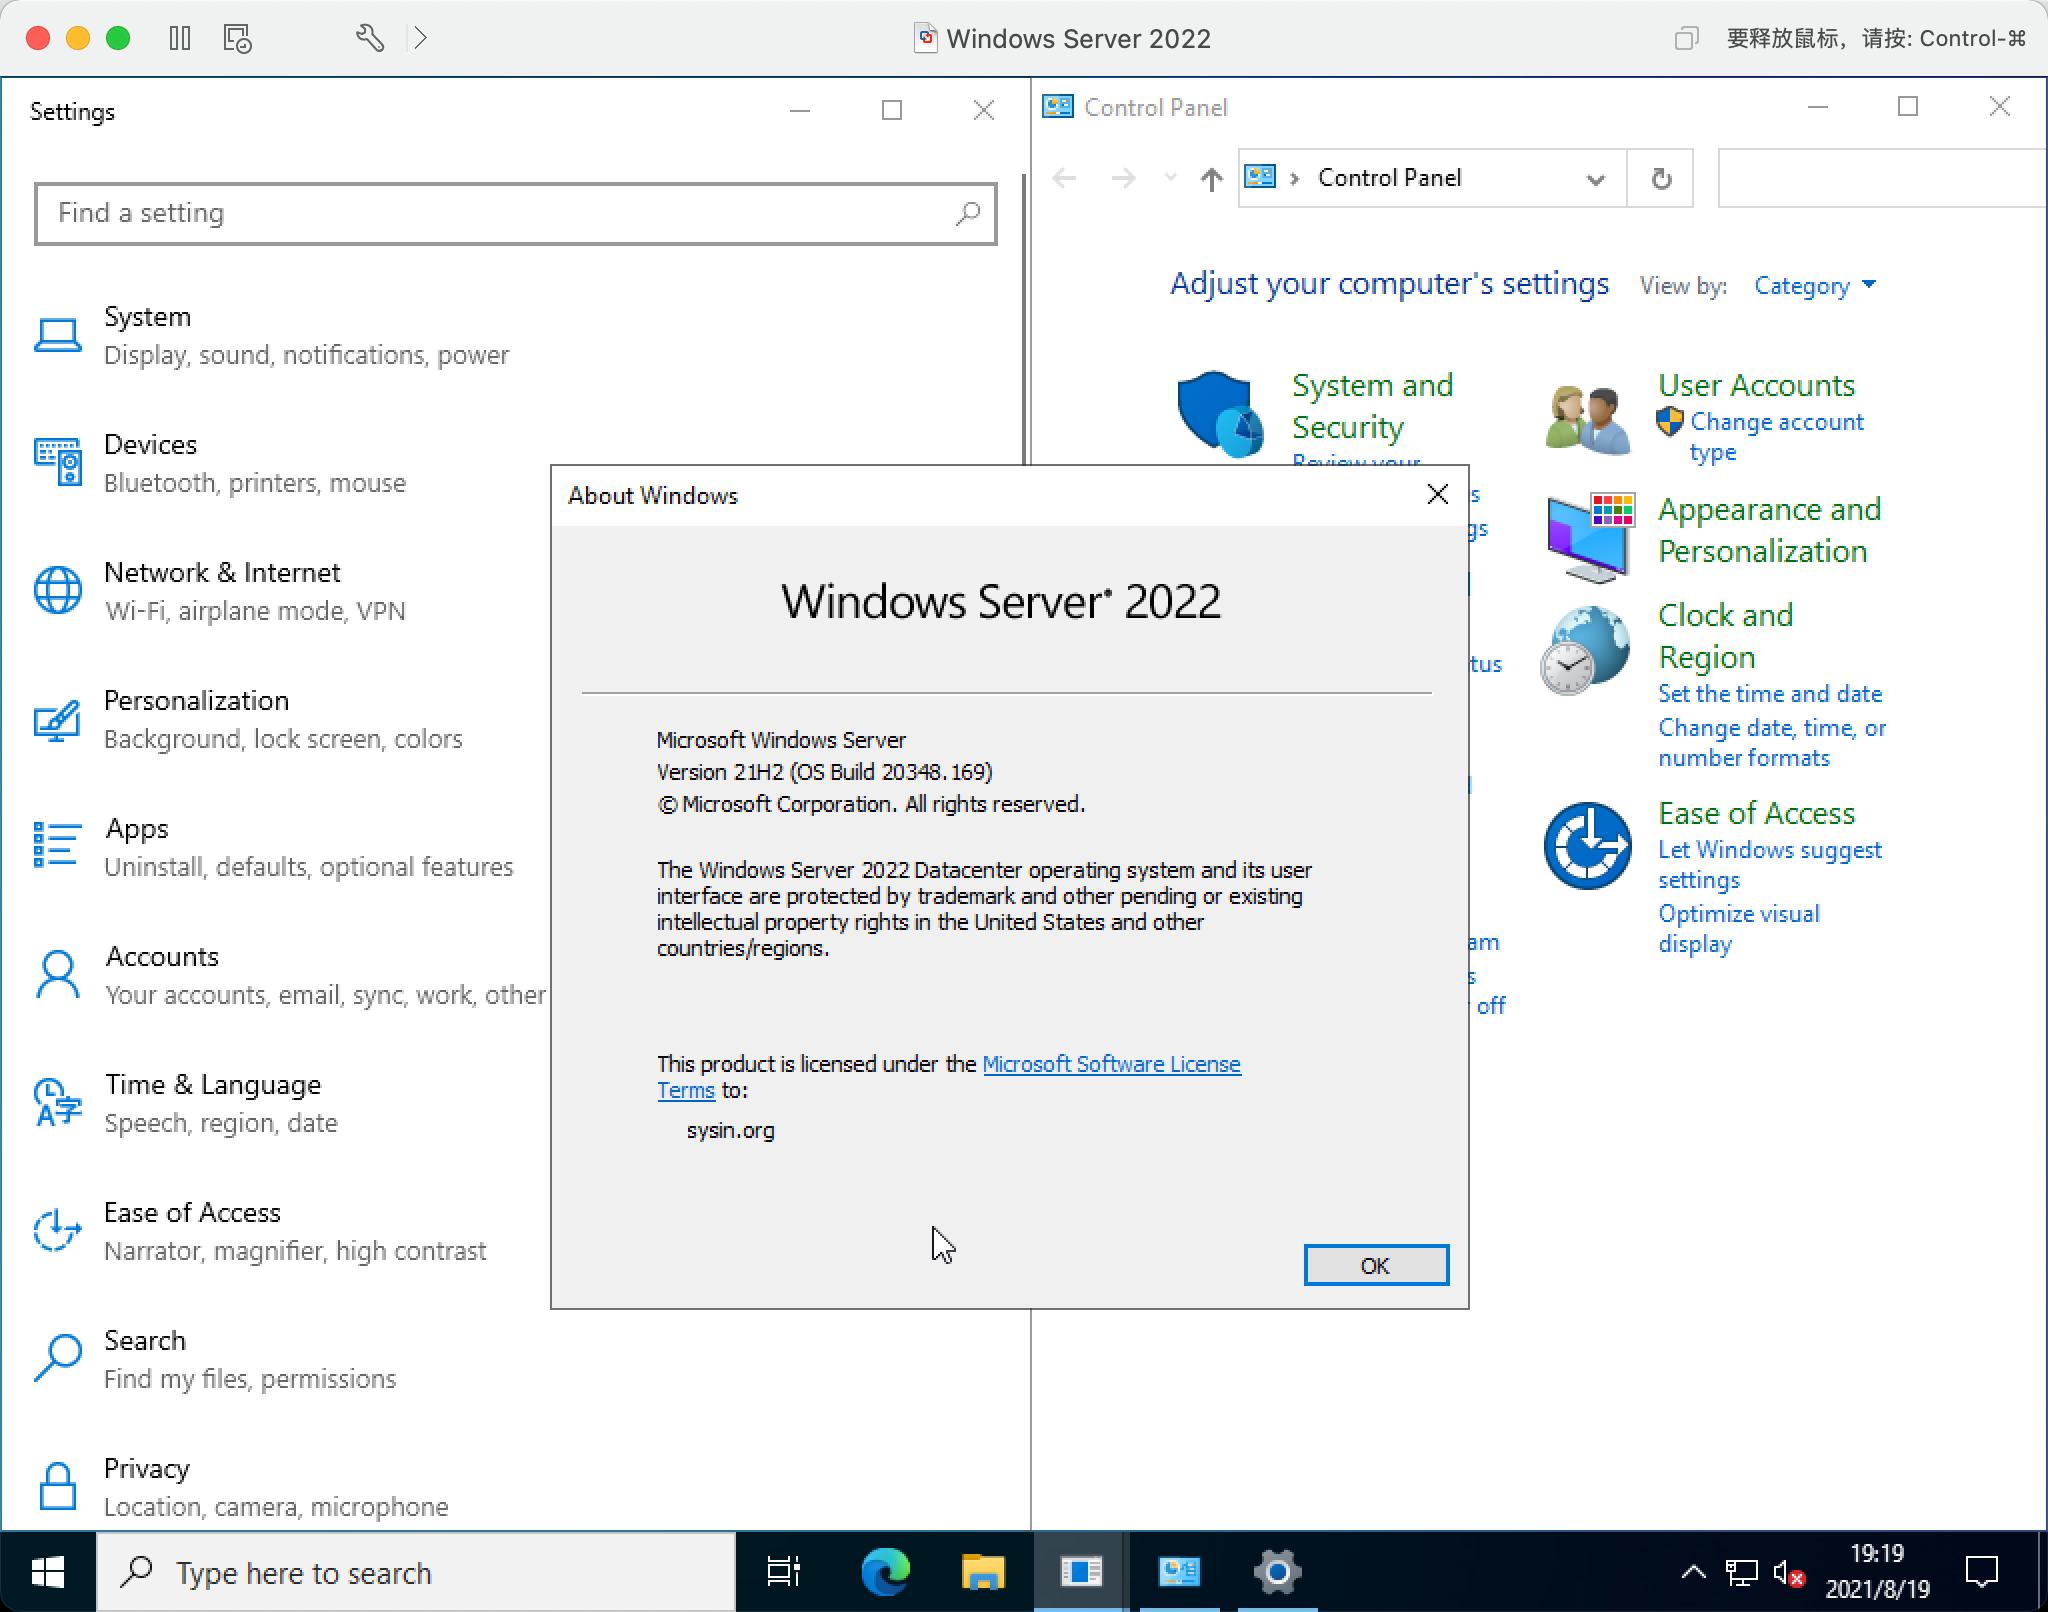 Windows Server 2022 interface at a glance